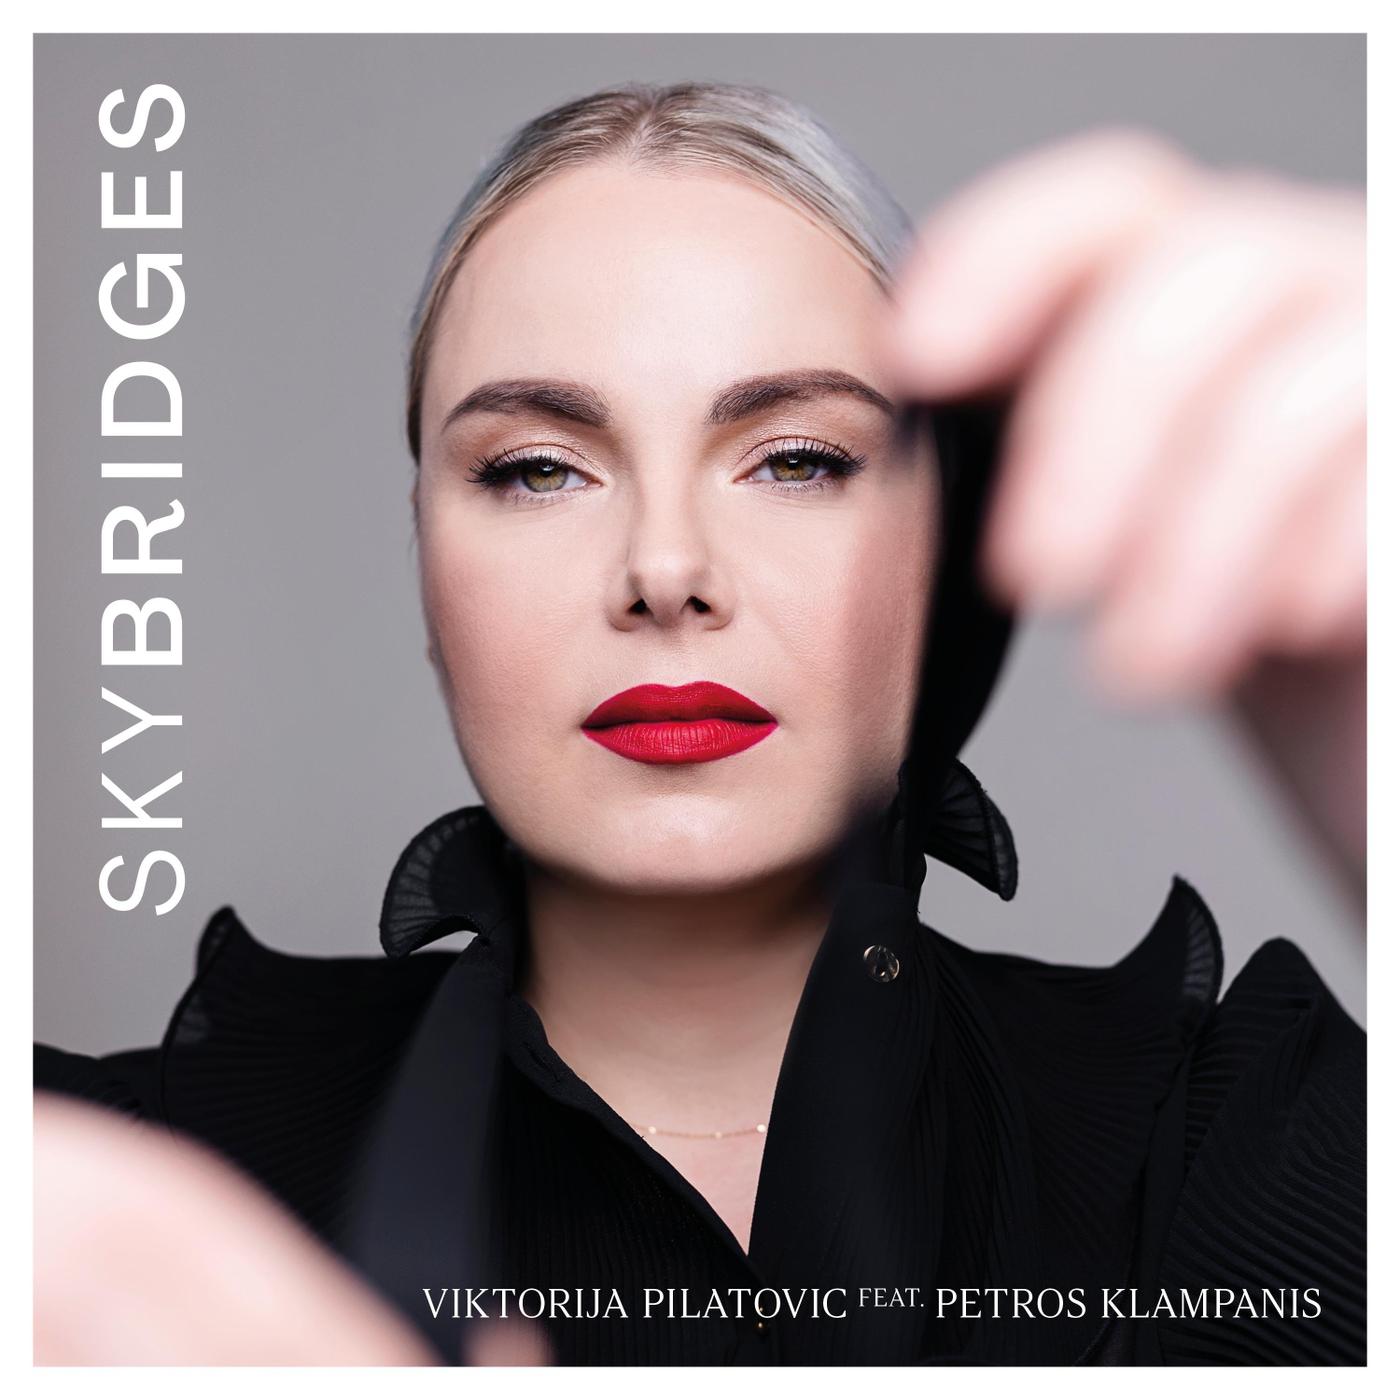 Viktorija Pilatovic - Skybridges (feat. Petros Klampanis, Albert Palau & Quique Ramirez)